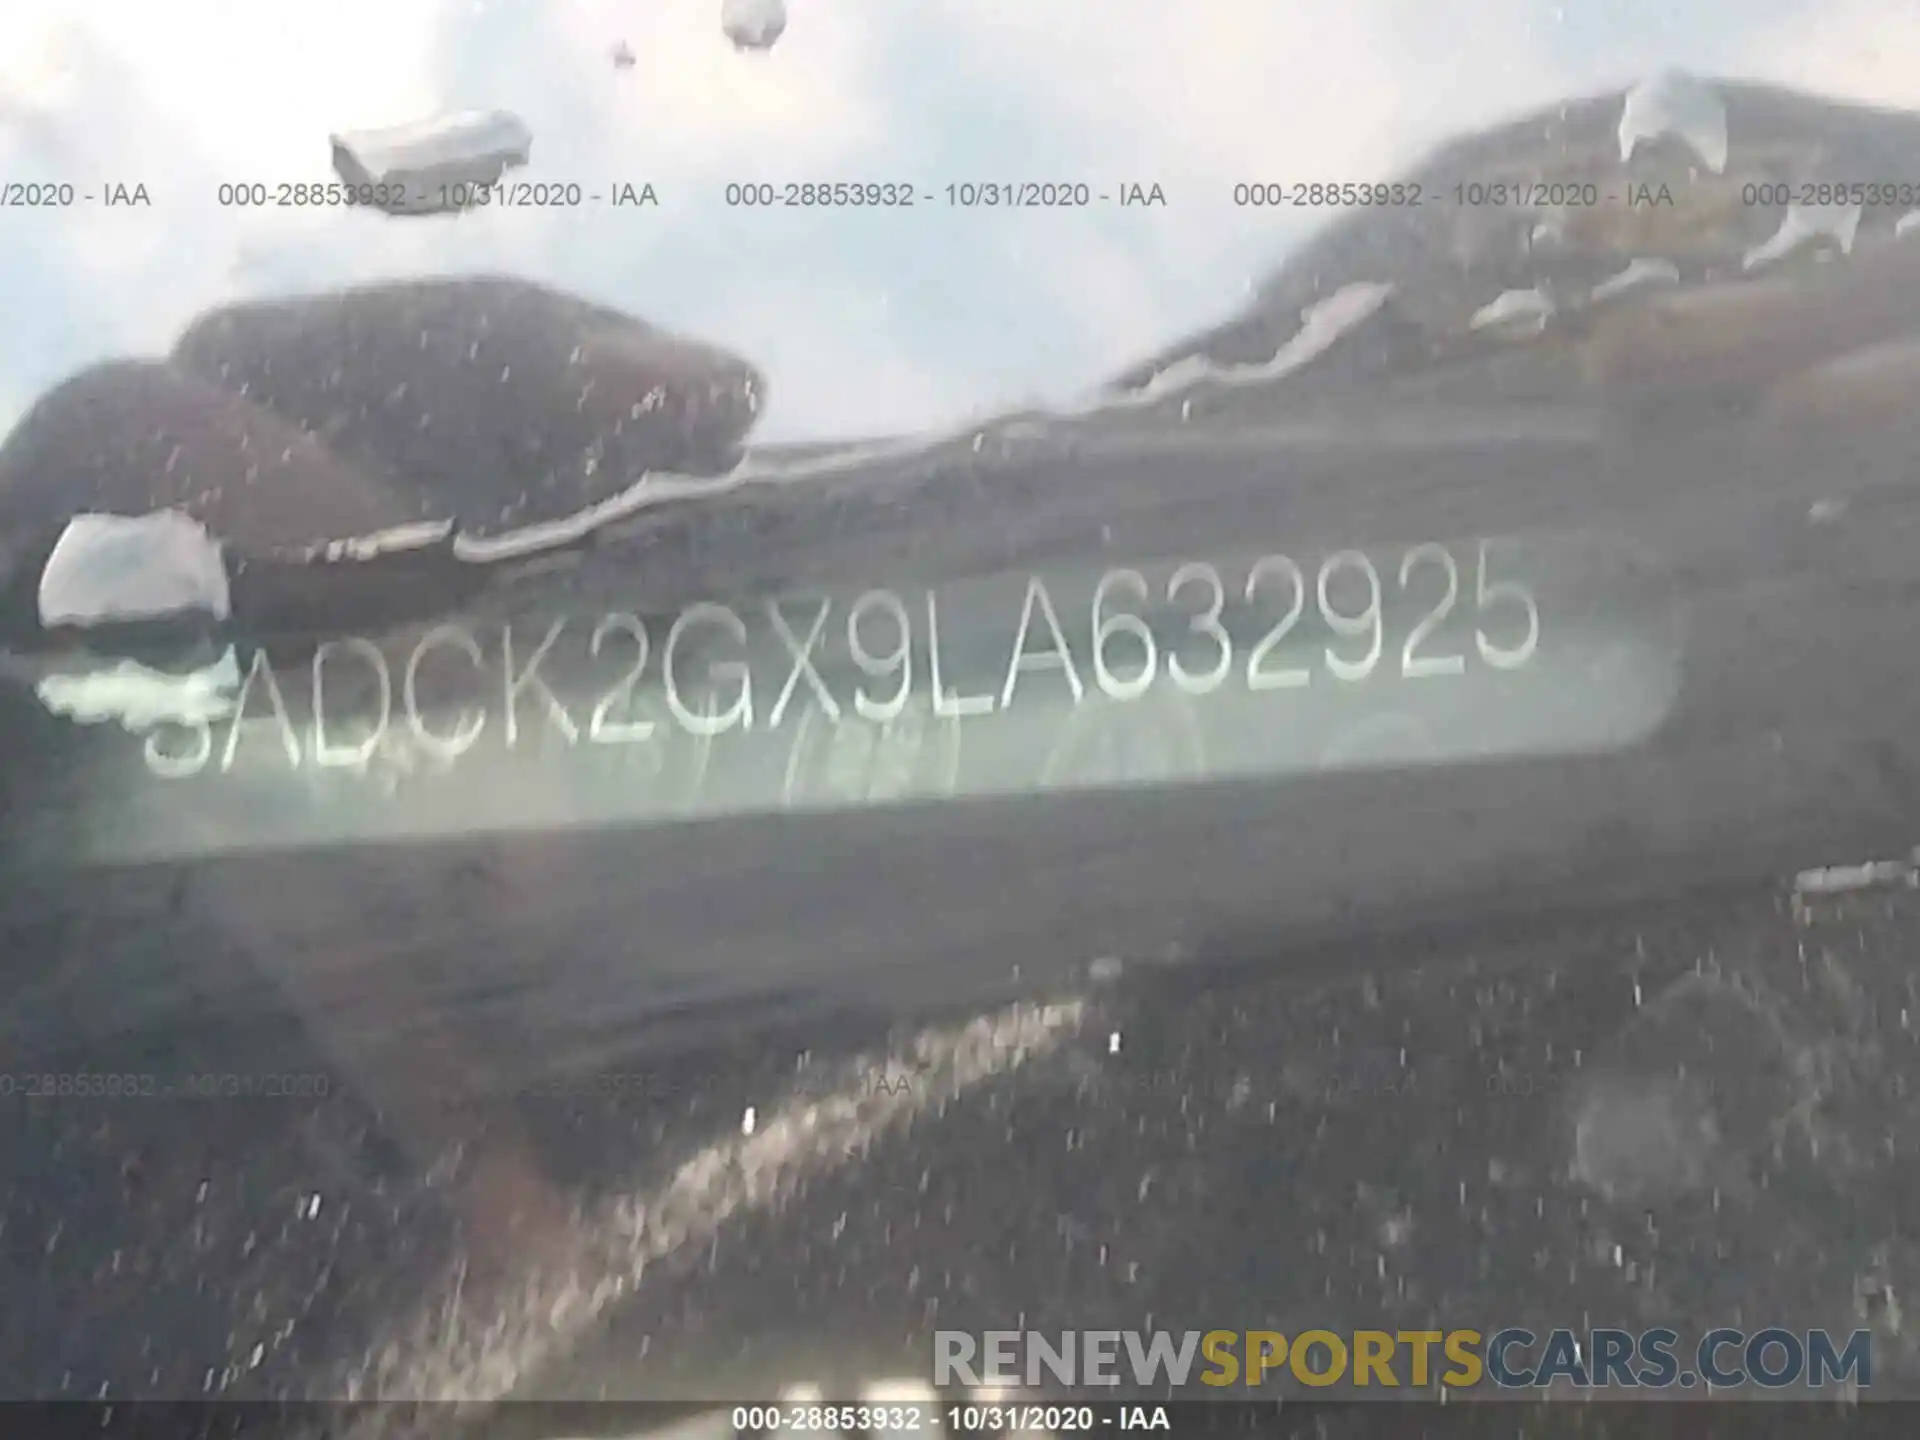 9 Photograph of a damaged car SADCK2GX9LA632925 JAGUAR F-PACE 2020